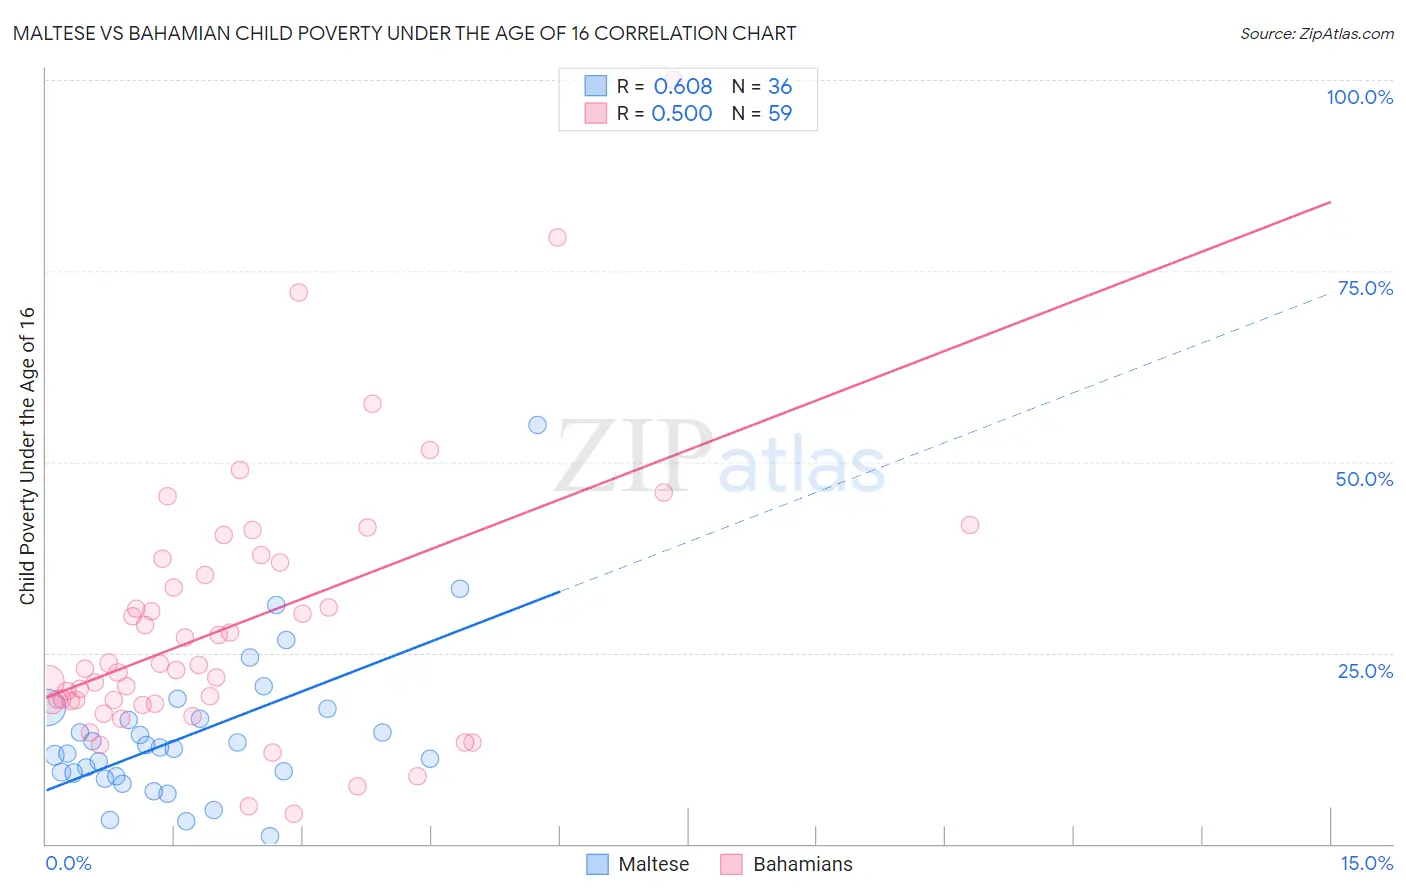 Maltese vs Bahamian Child Poverty Under the Age of 16